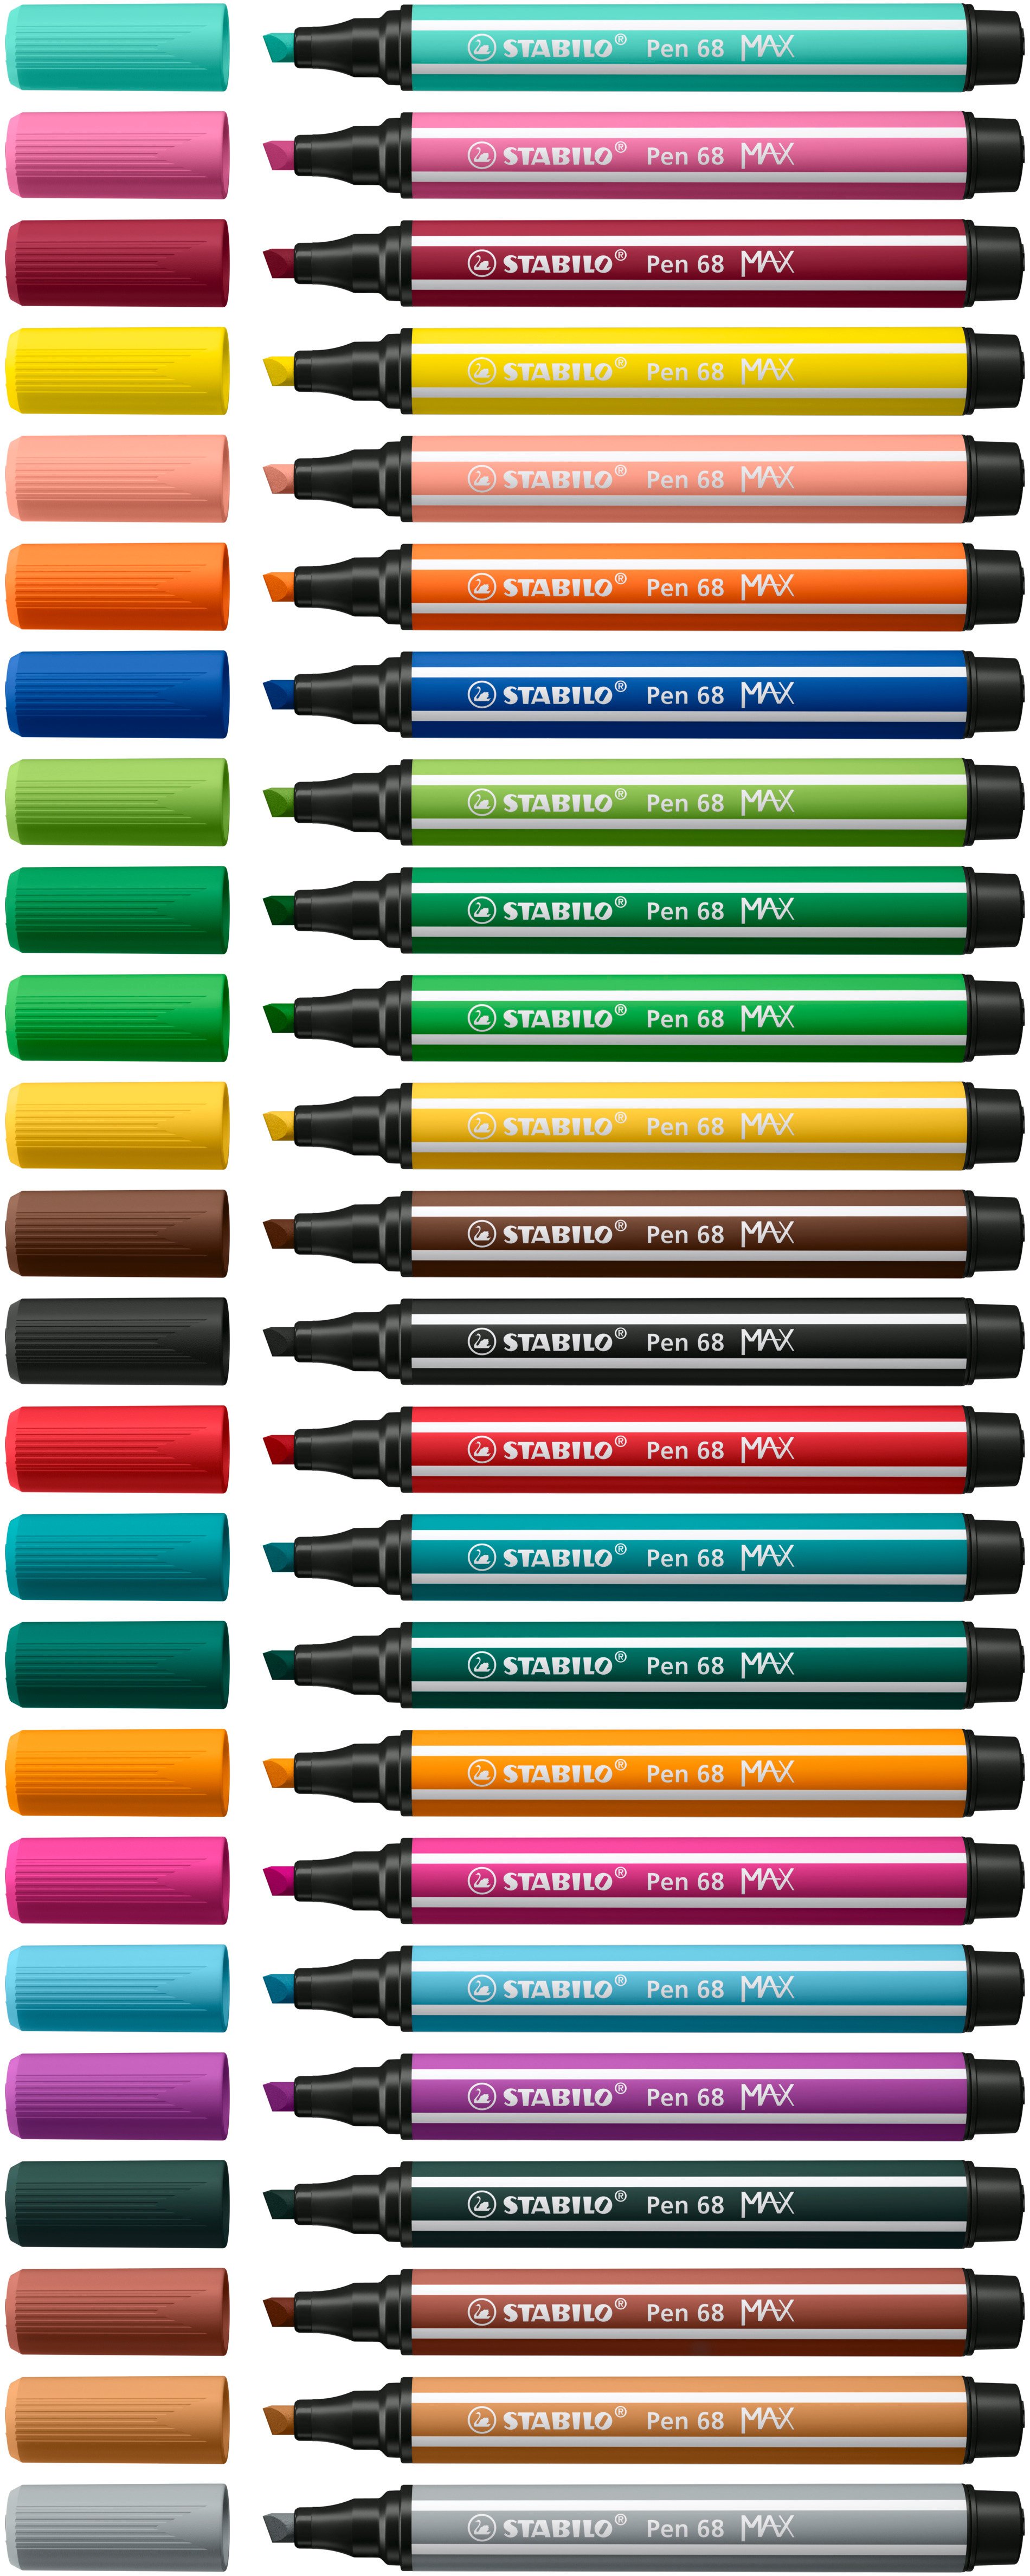 Premium felt-tip pen STABILO Pen 68 MAX - pack of 24 ARTY